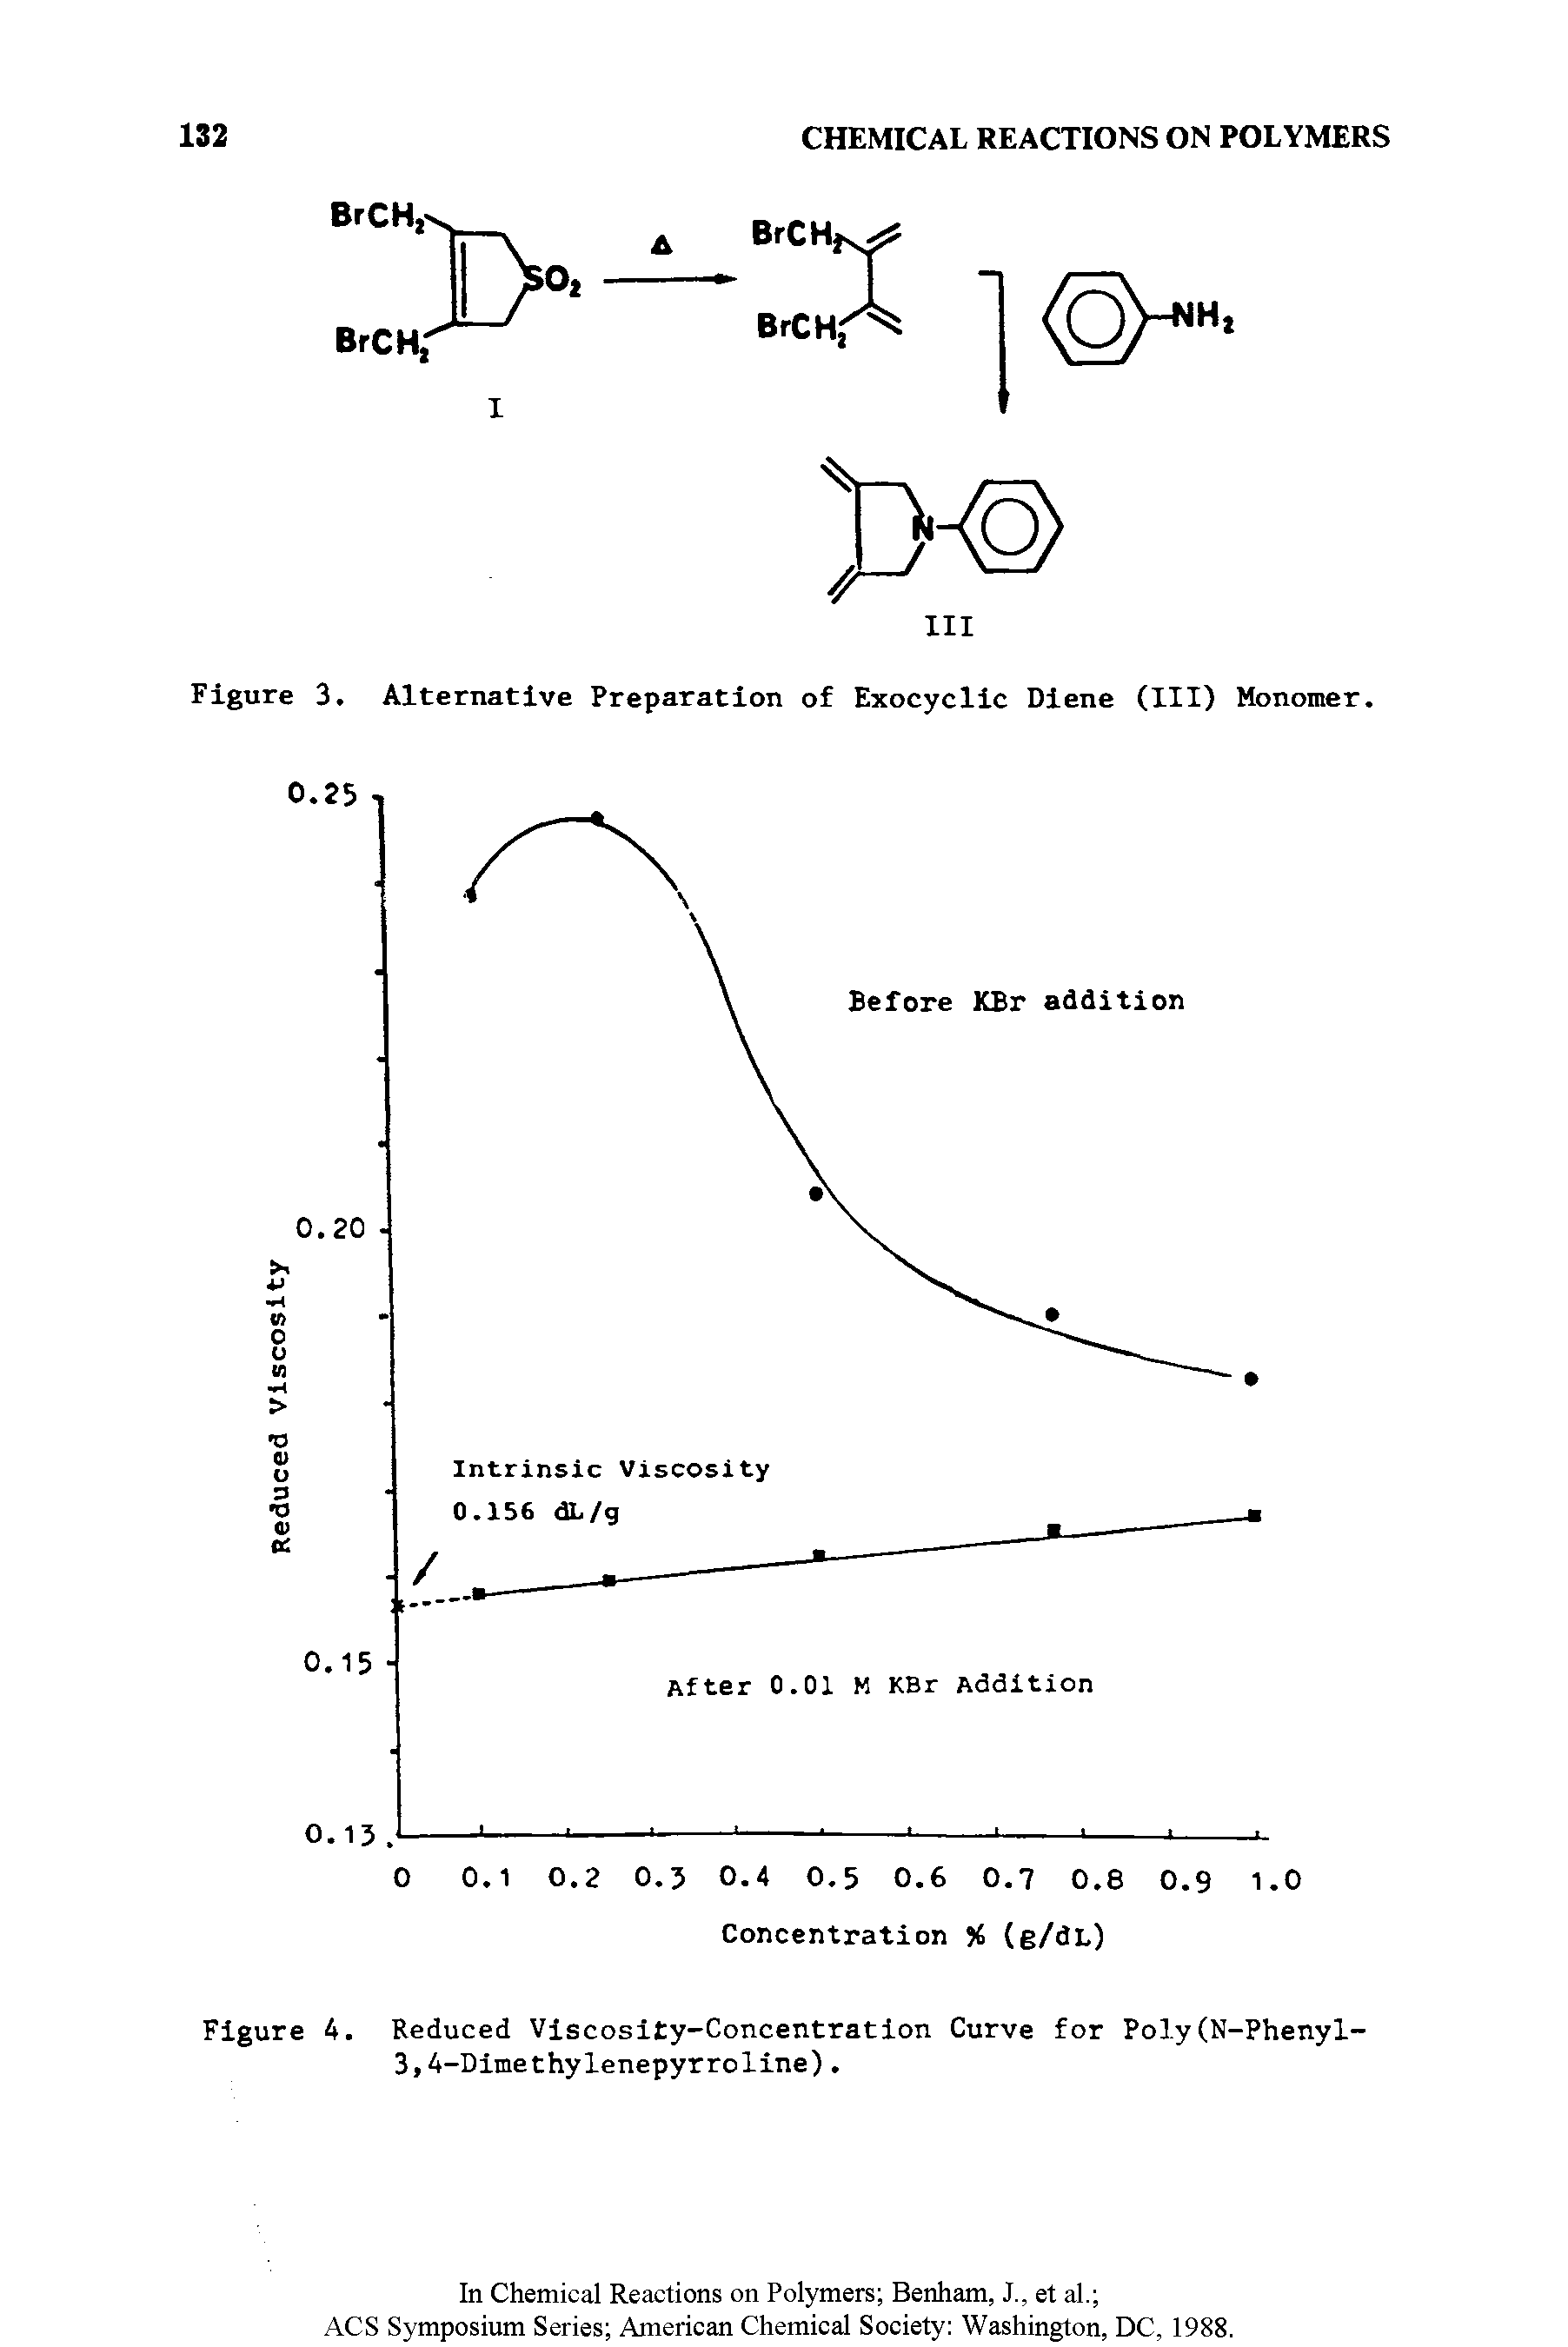 Figure 3. Alternative Preparation of Exocyclic Diene (III) Monomer.